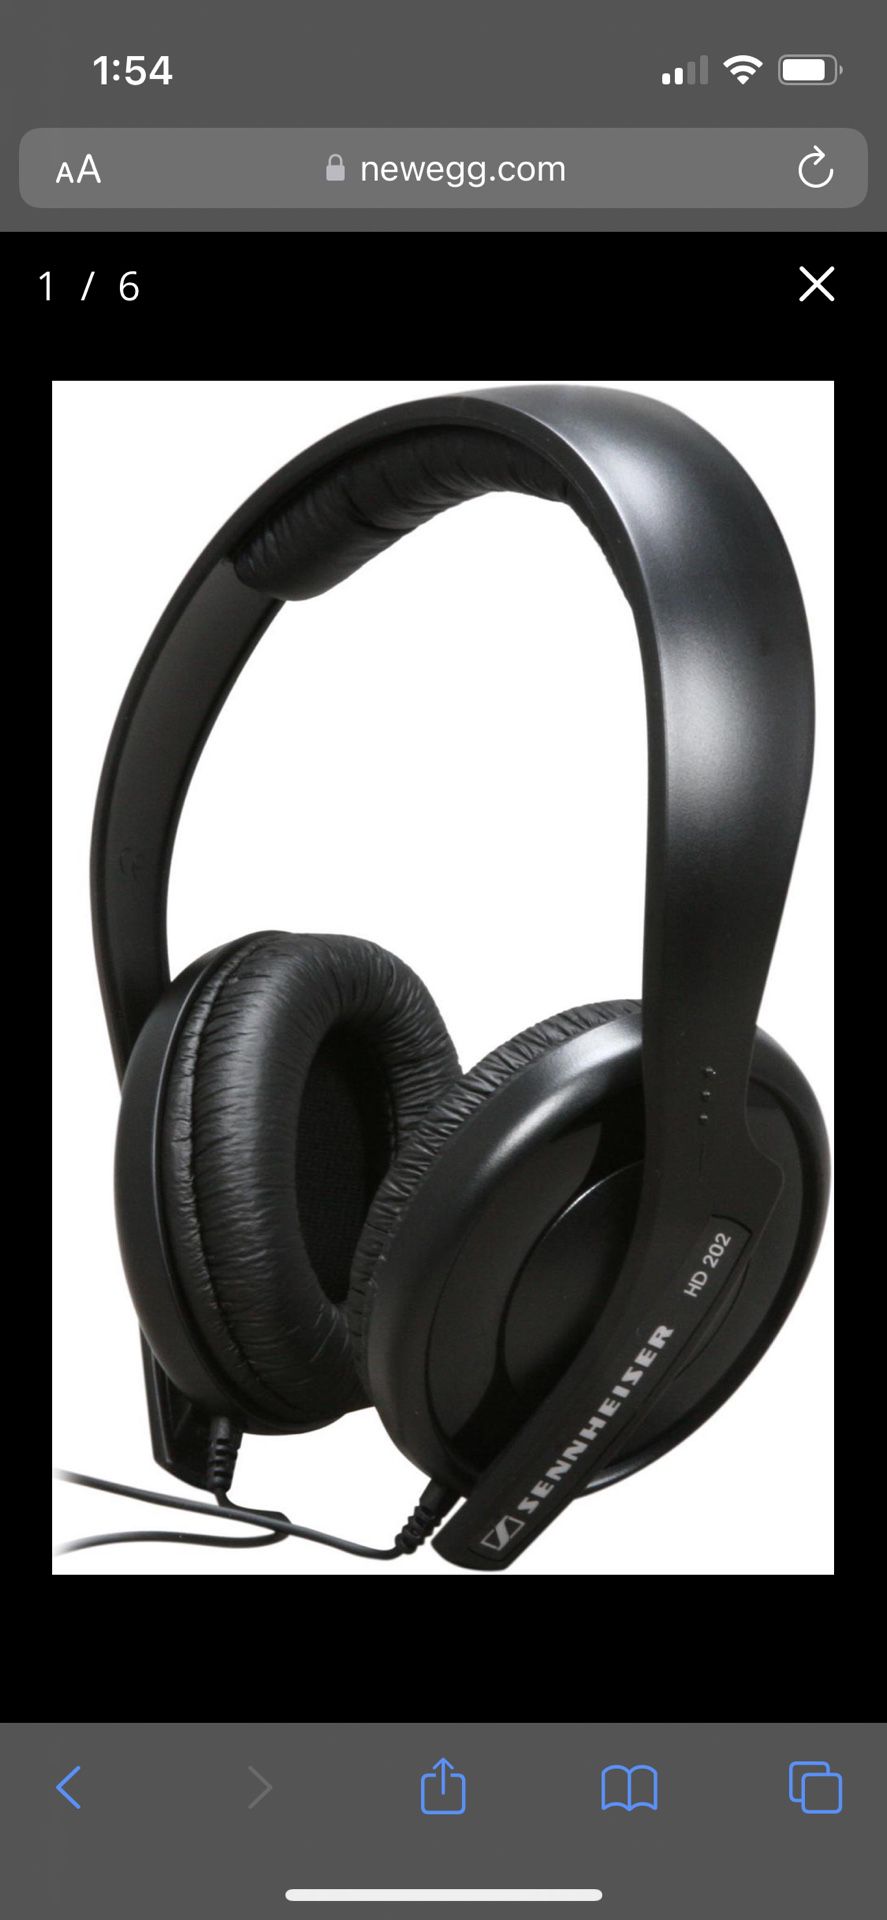 Sennheiser HD 202 II Over-Ear DJ Headphones HD202 Wired Cushion Headset 1/8in. and 1/4in. (3.5mm and 6.3mm) Connector Semi-Circumaural Dynamic Hi-Fi